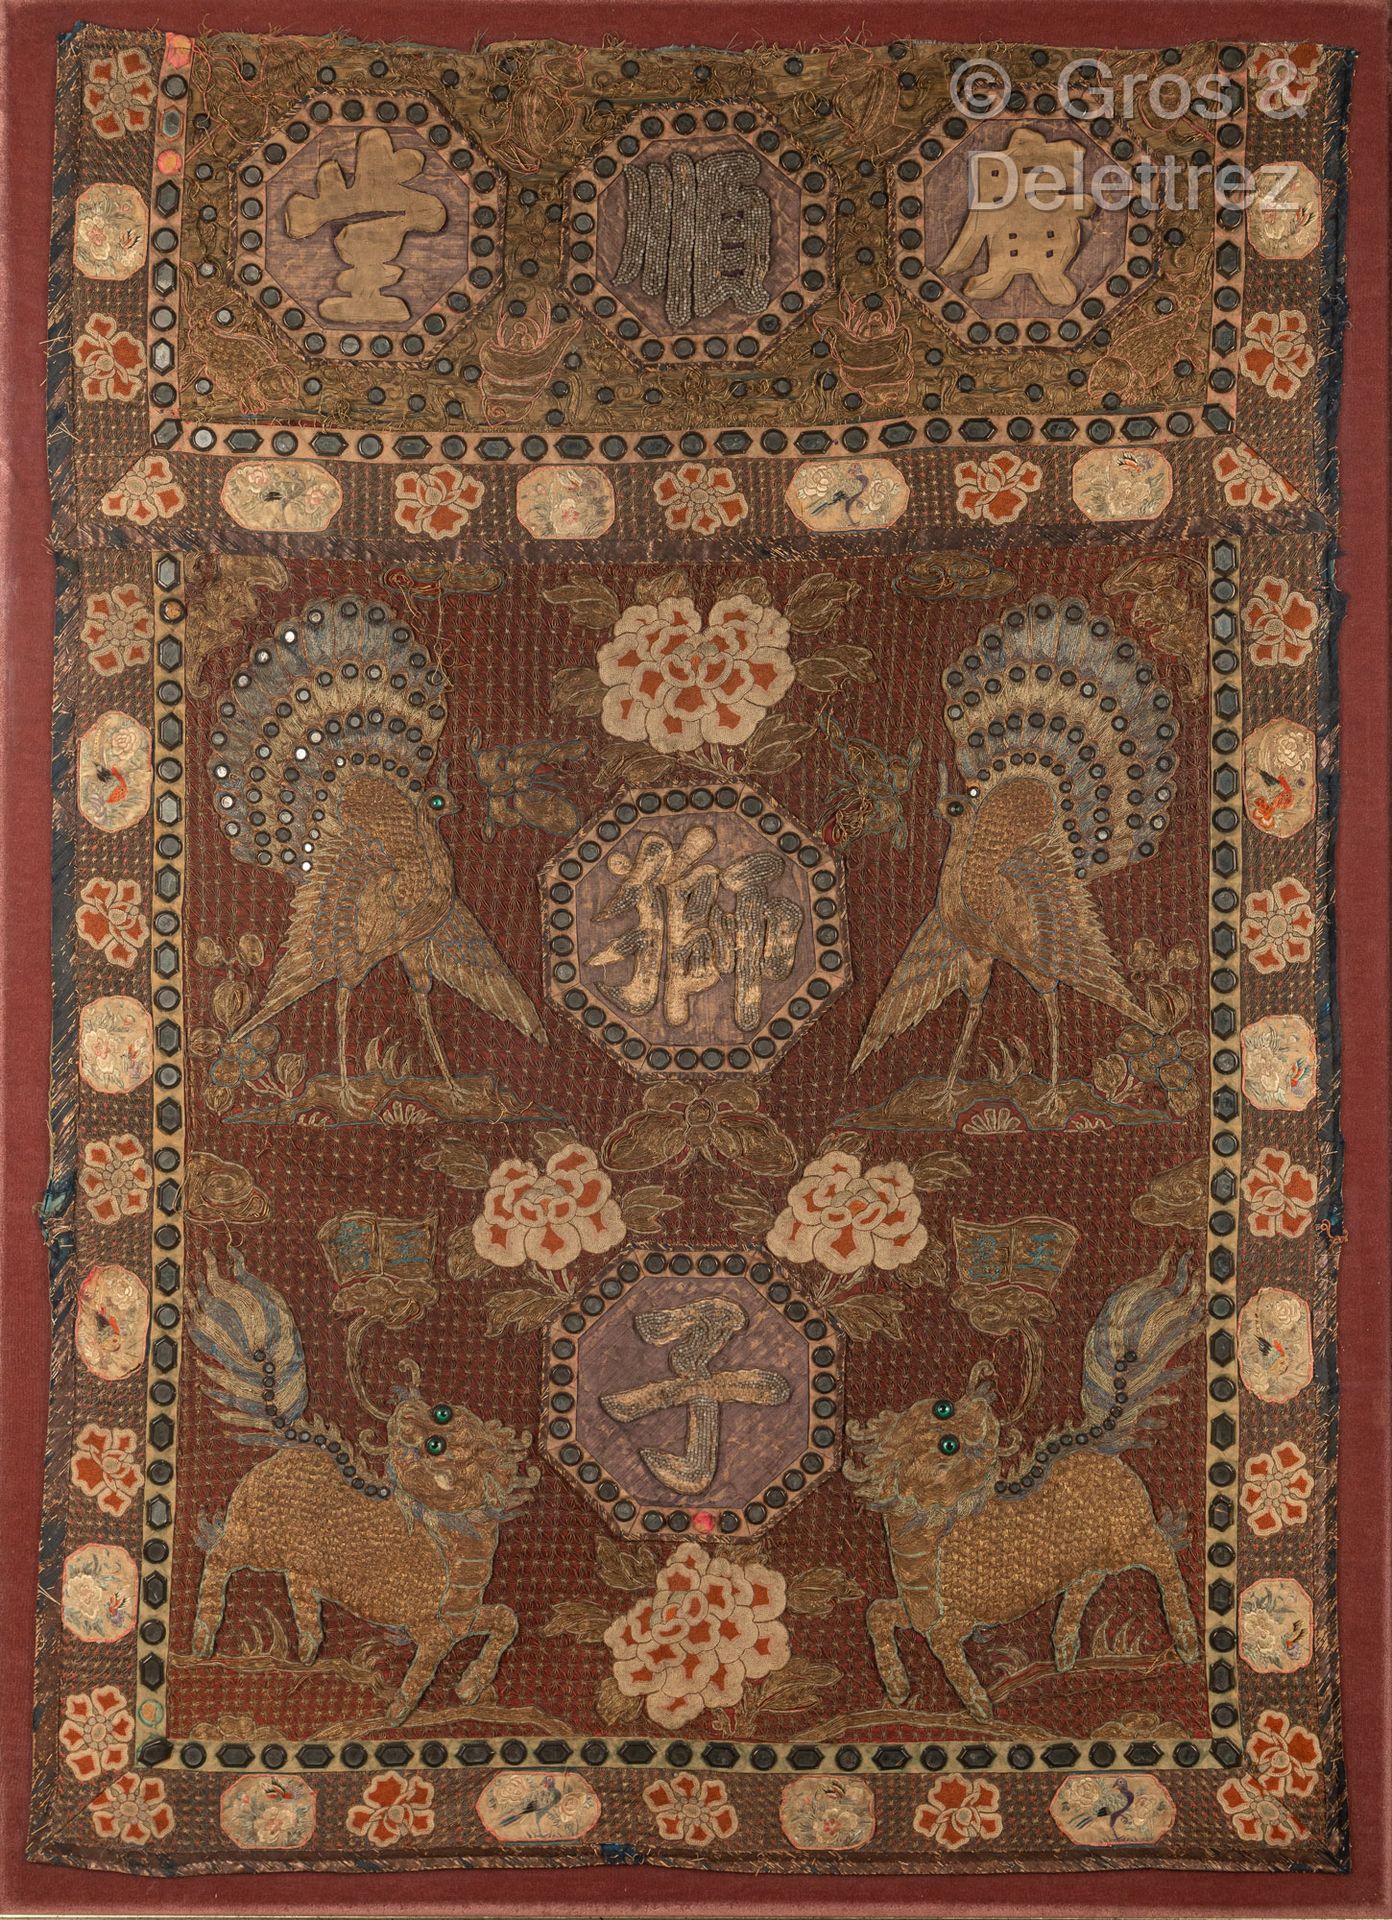 Null 中国。织物和金属线的横幅，装饰着狗和孔雀。
19世纪
120 x 82厘米